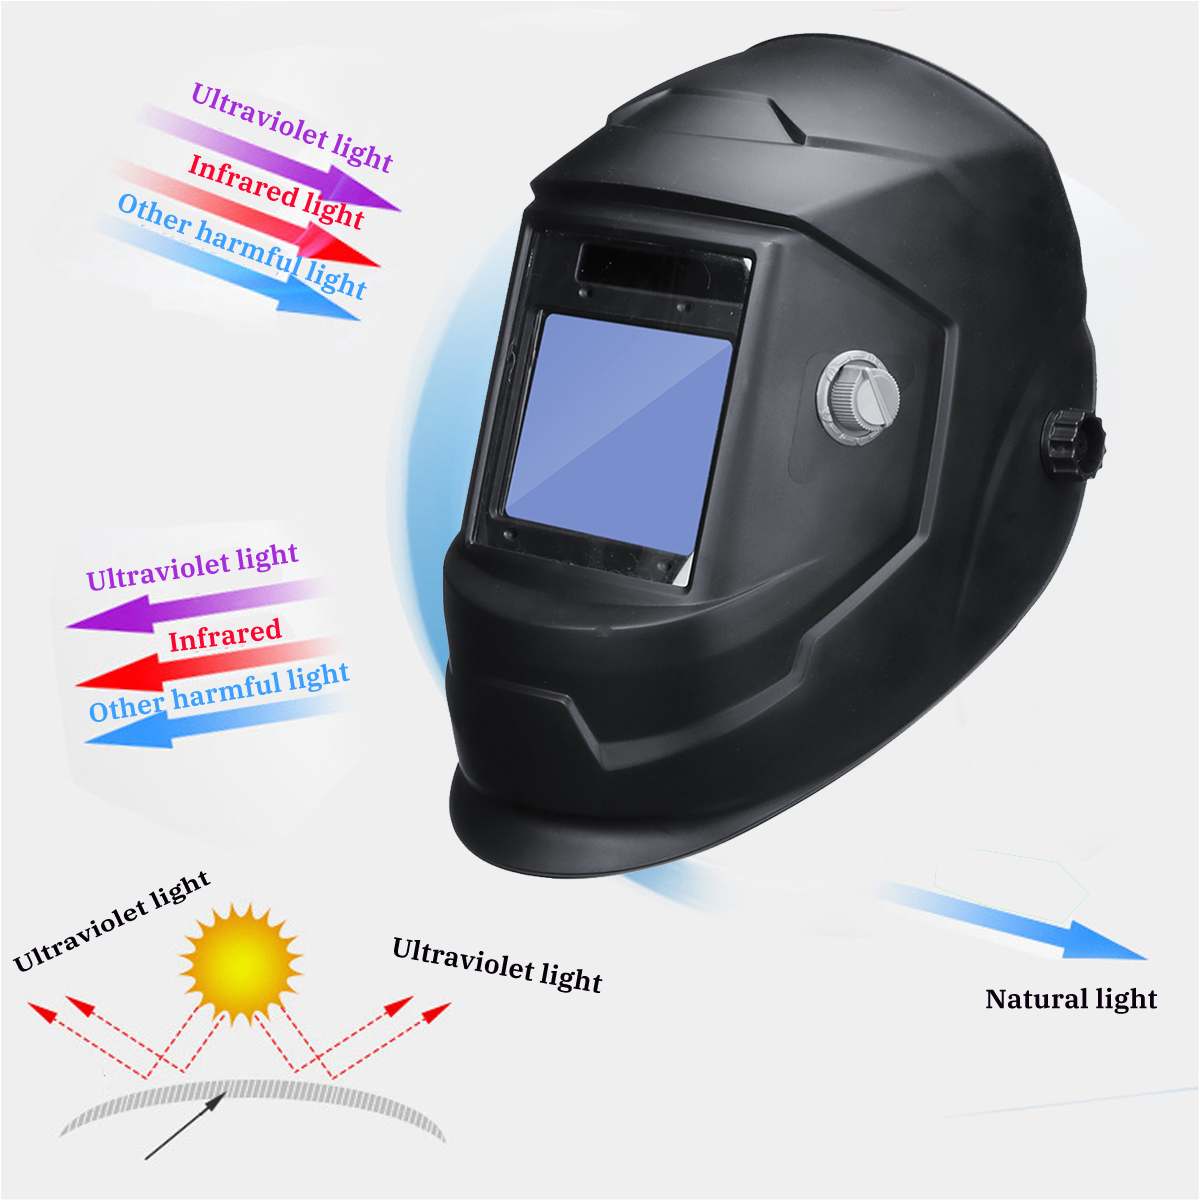 Solar Powered Auto Darkening Welding Helmet Adjustable Shade Range DIN 9-13/Rest DIN 4 Large View Area Arc Tig Mig Welder Mask